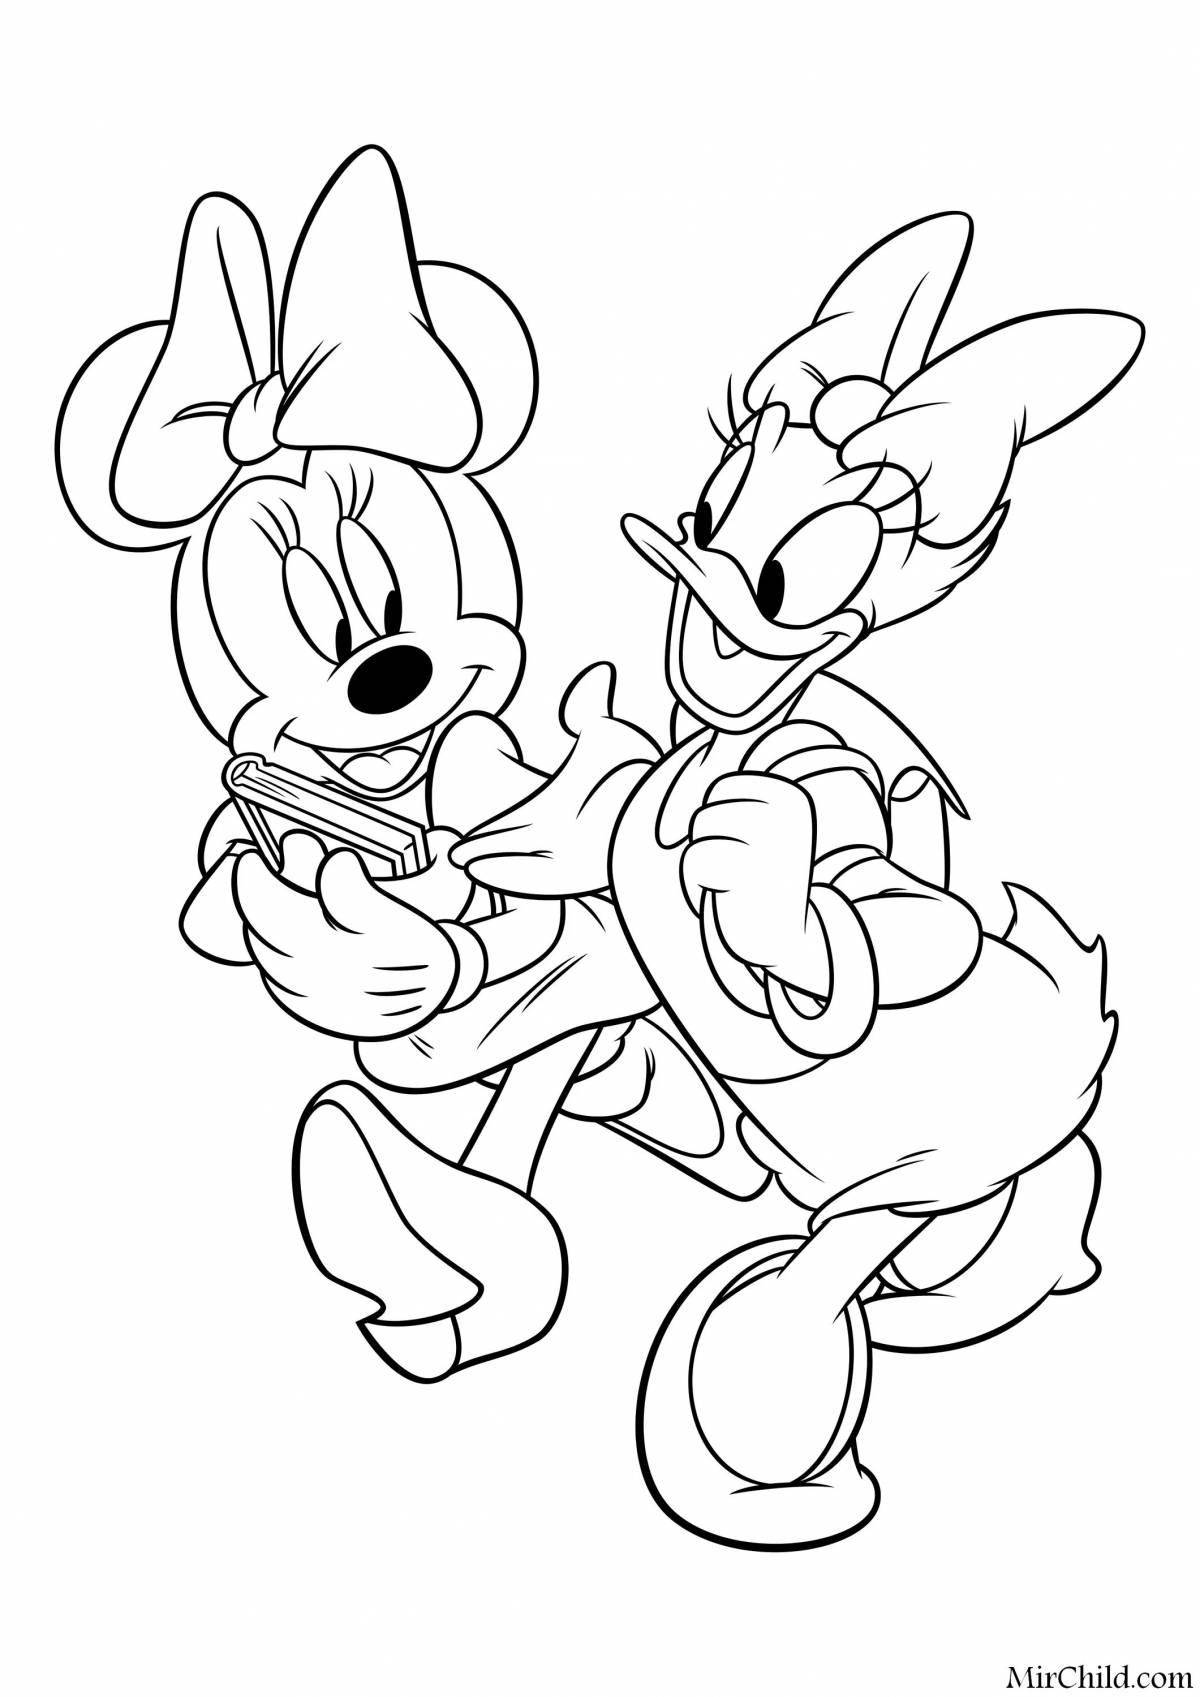 Mickey's happy coloring book